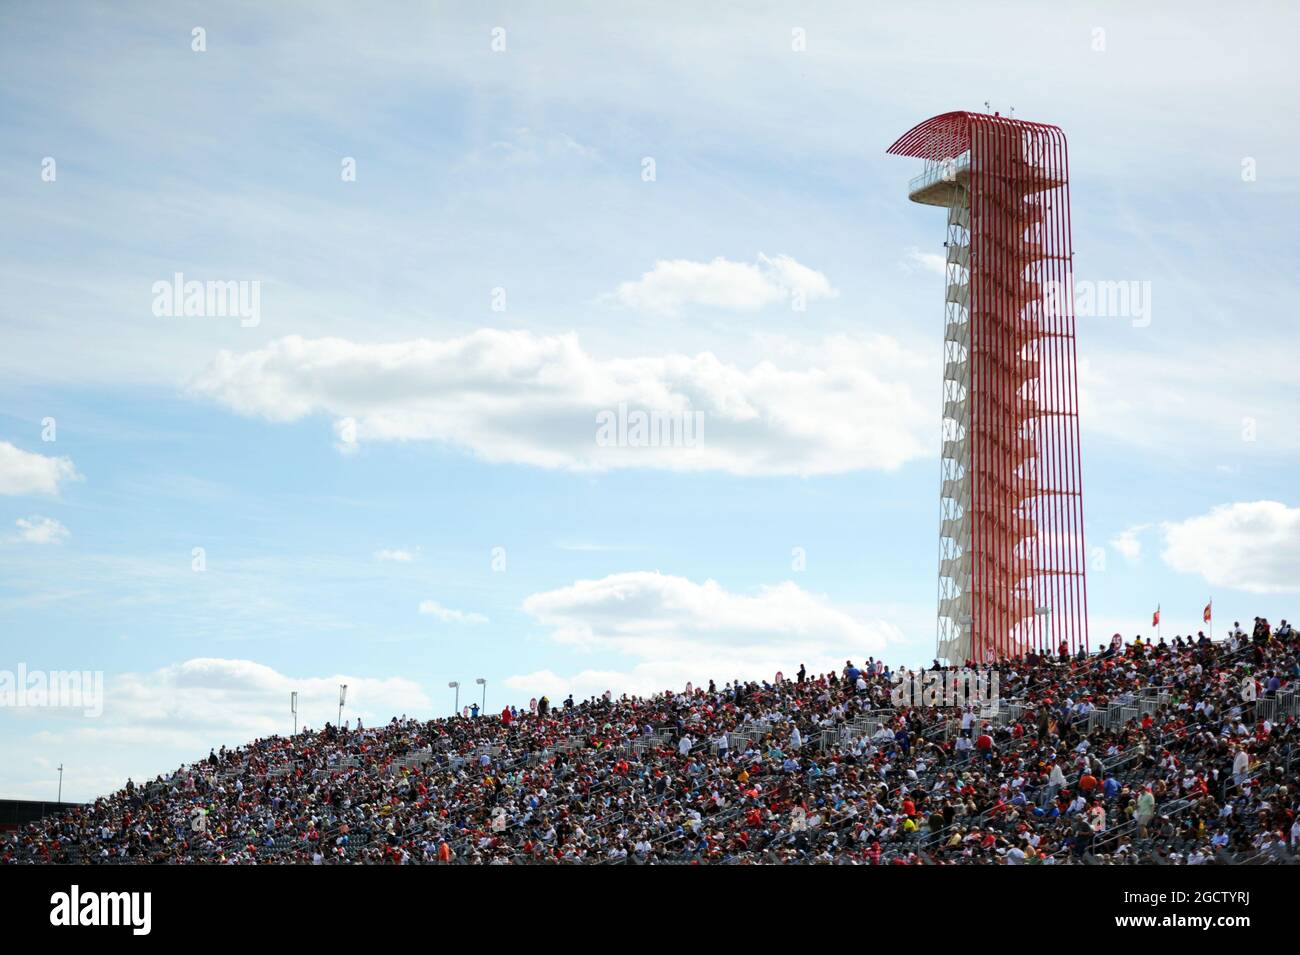 The crowd. United States Grand Prix, Sunday 2nd November 2014. Circuit of the Americas, Austin, Texas, USA. Stock Photo